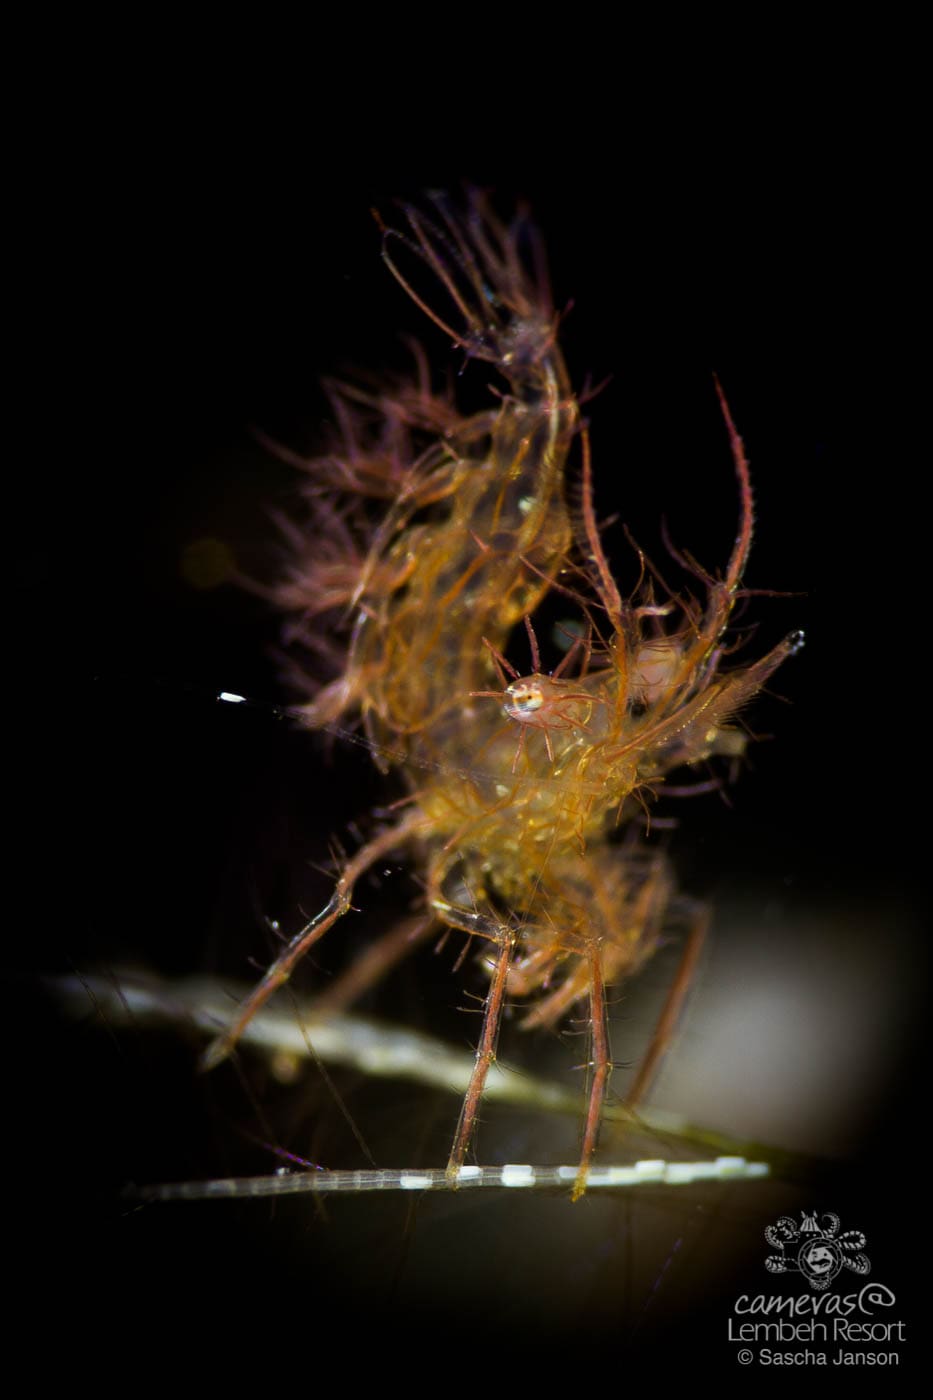 Hairy Shrimp (Phycocaris simulans) Lembeh Strait, Canon 7D, 60mm